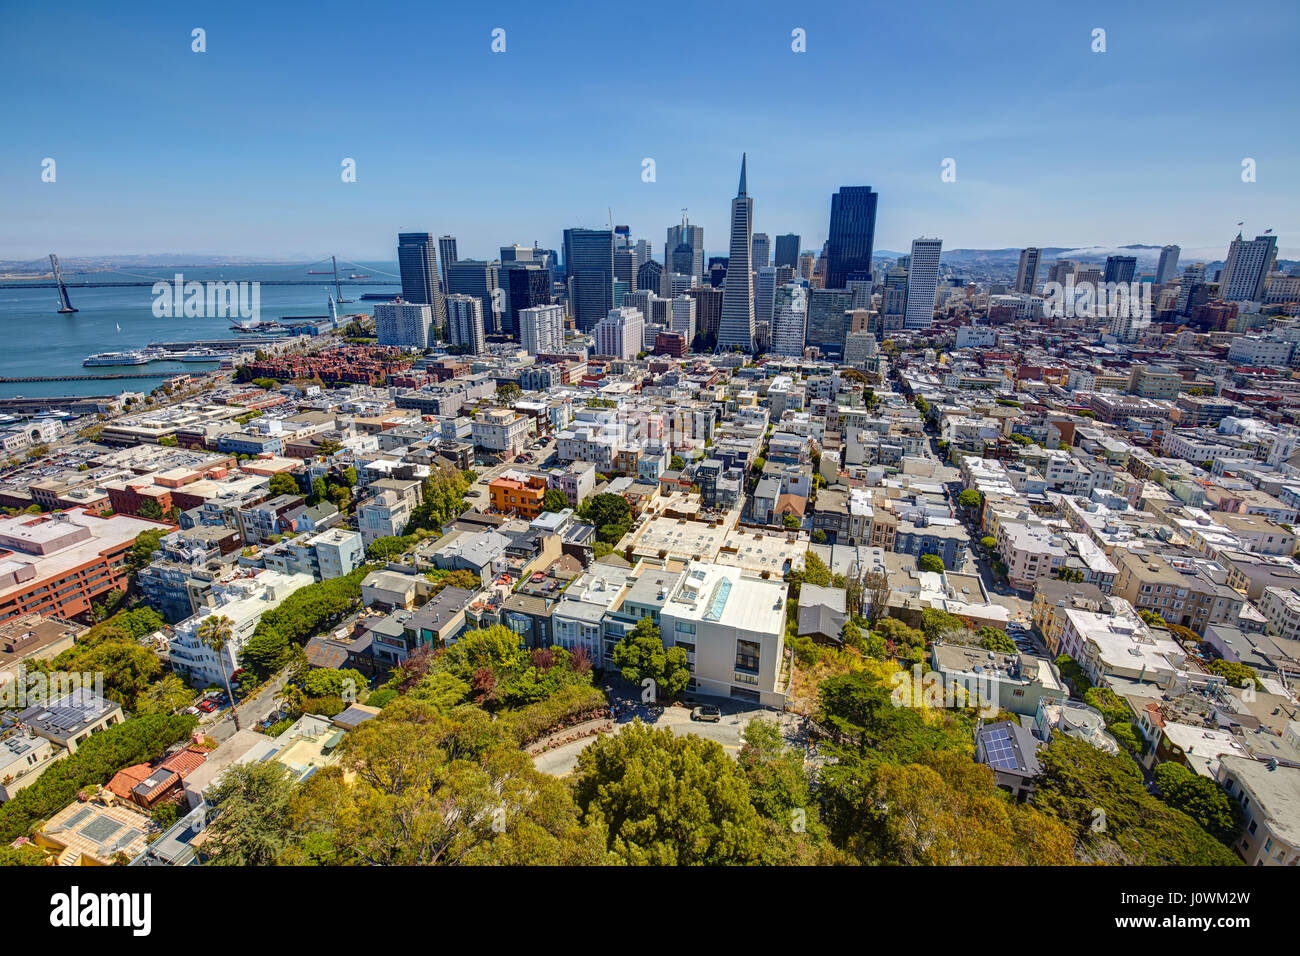 Financial district seen from Coit tower, San Francisco, California, USA Stock Photo